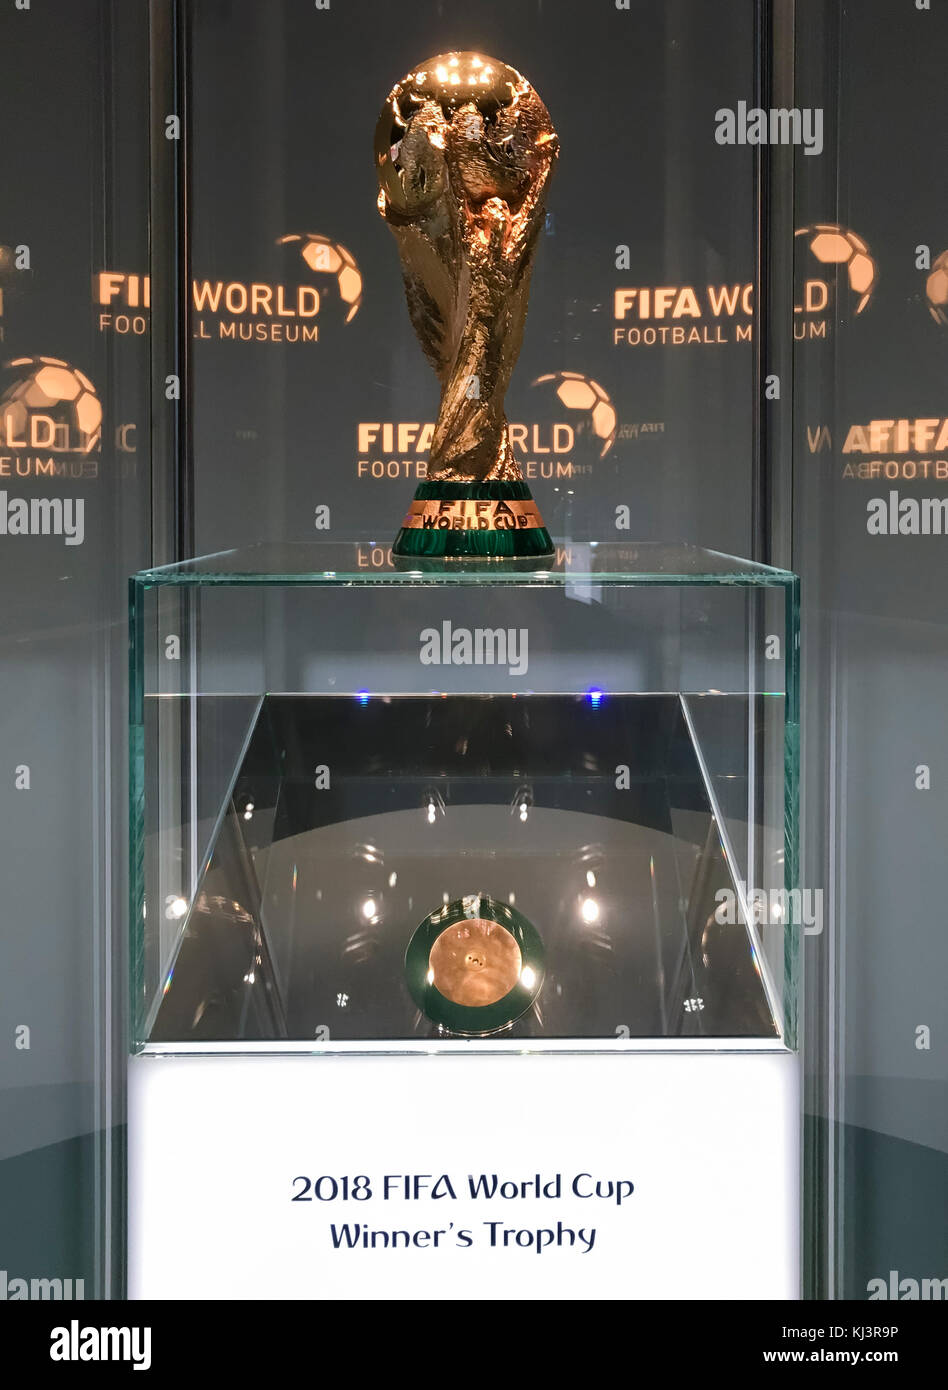 Zurich, Switzerland - 12 Nov 2017: The FIFA World Cup trophy, exhibited at the FIFA World football museum in Zurich, Switzerland. Stock Photo